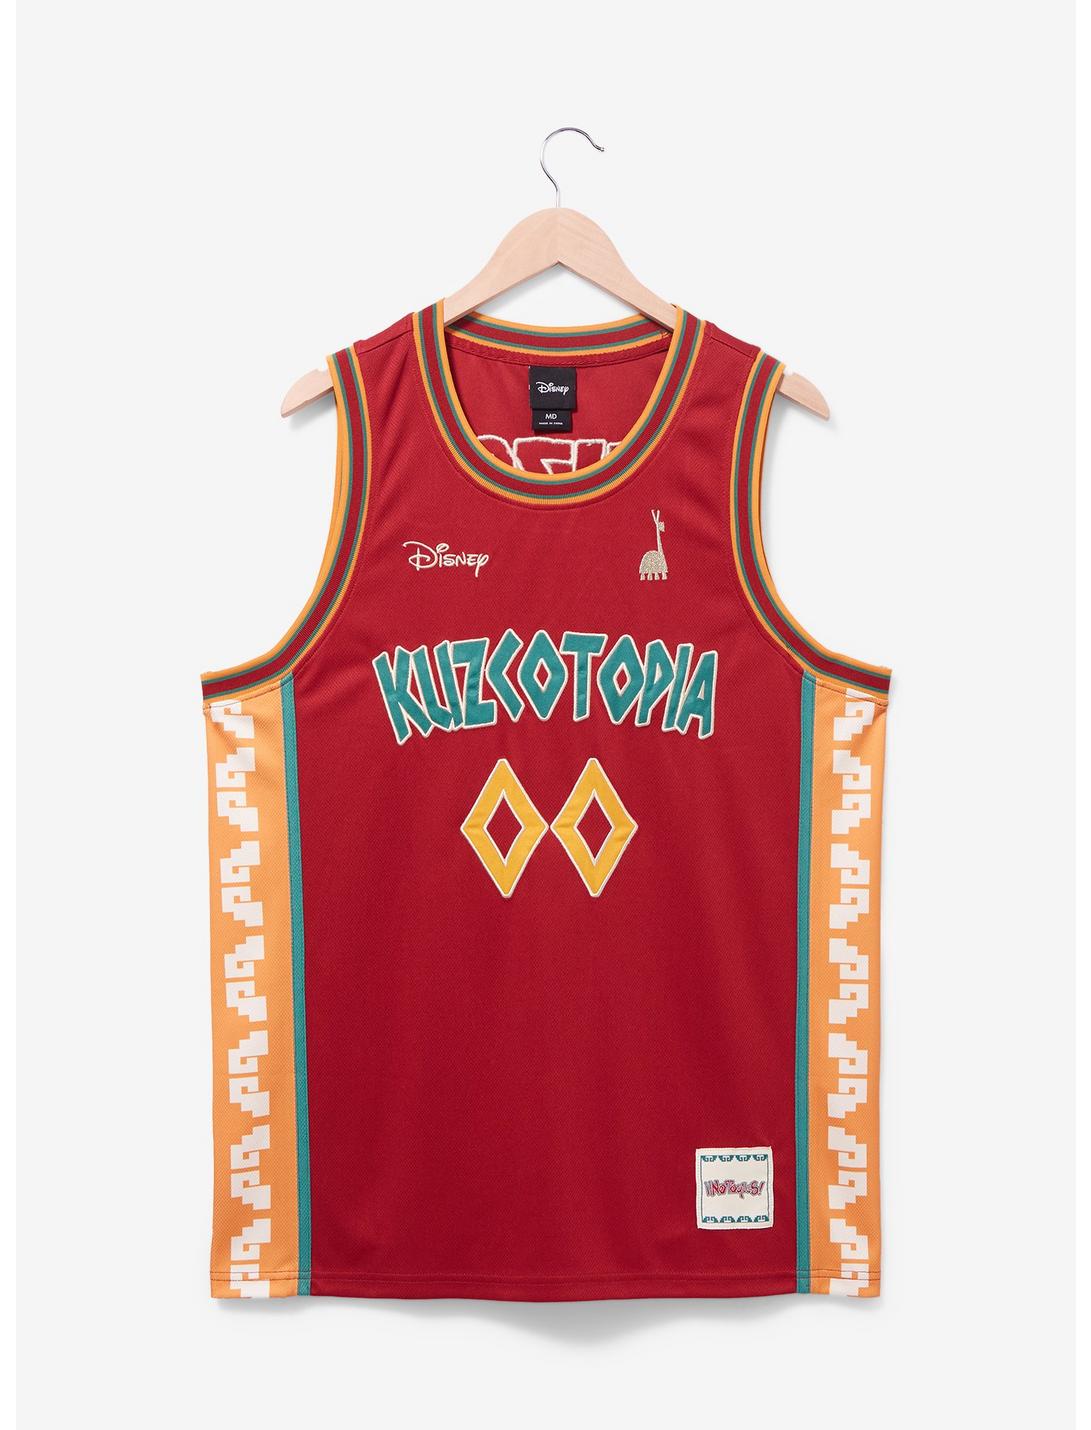 Disney The Emperor's New Groove Kuzcotopia Basketball Jersey - BoxLunch Exclusive, DARK RED, hi-res